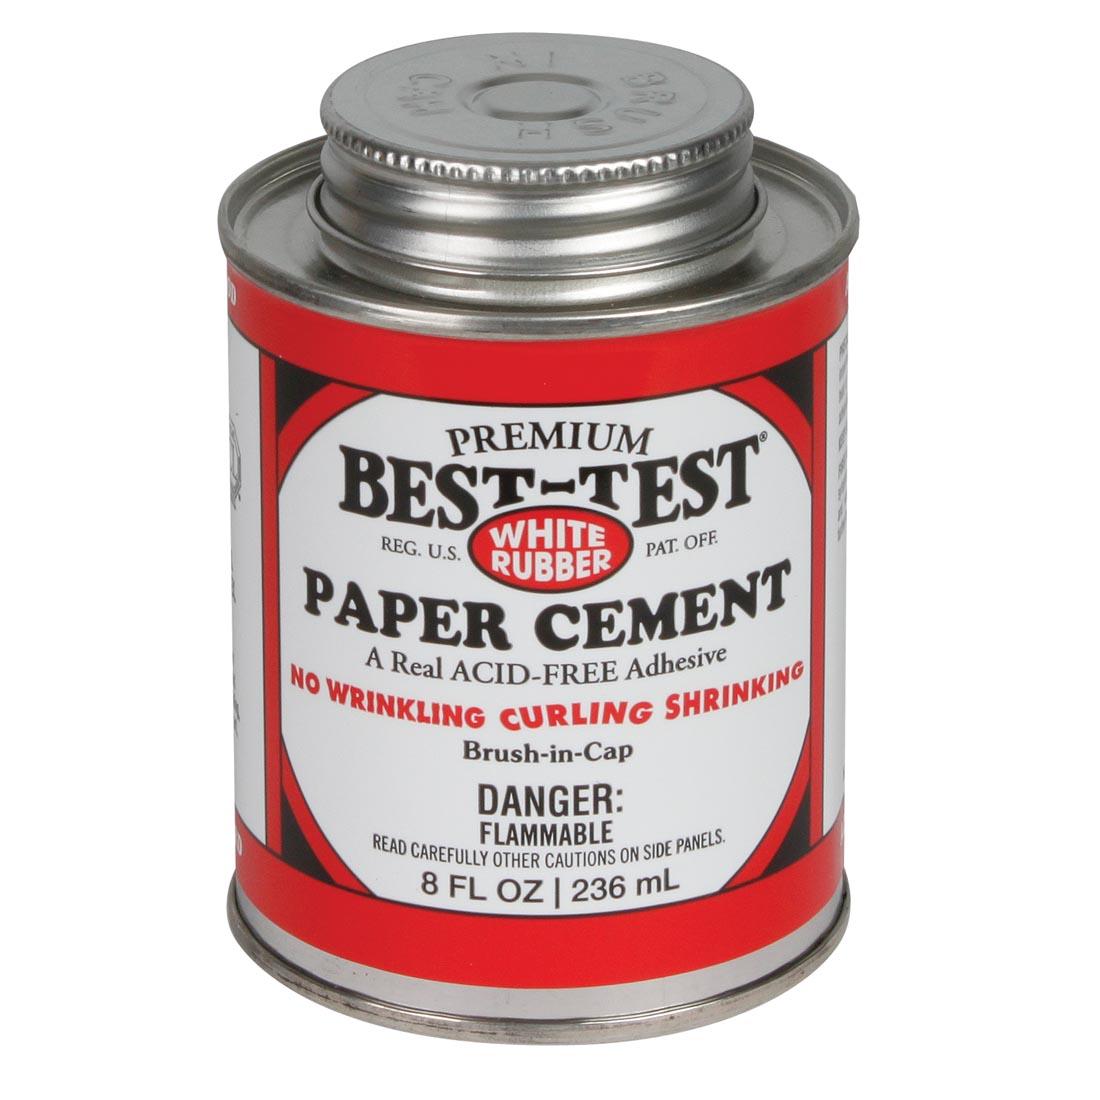 Best-Test White Rubber Paper Cement Metal Bottle